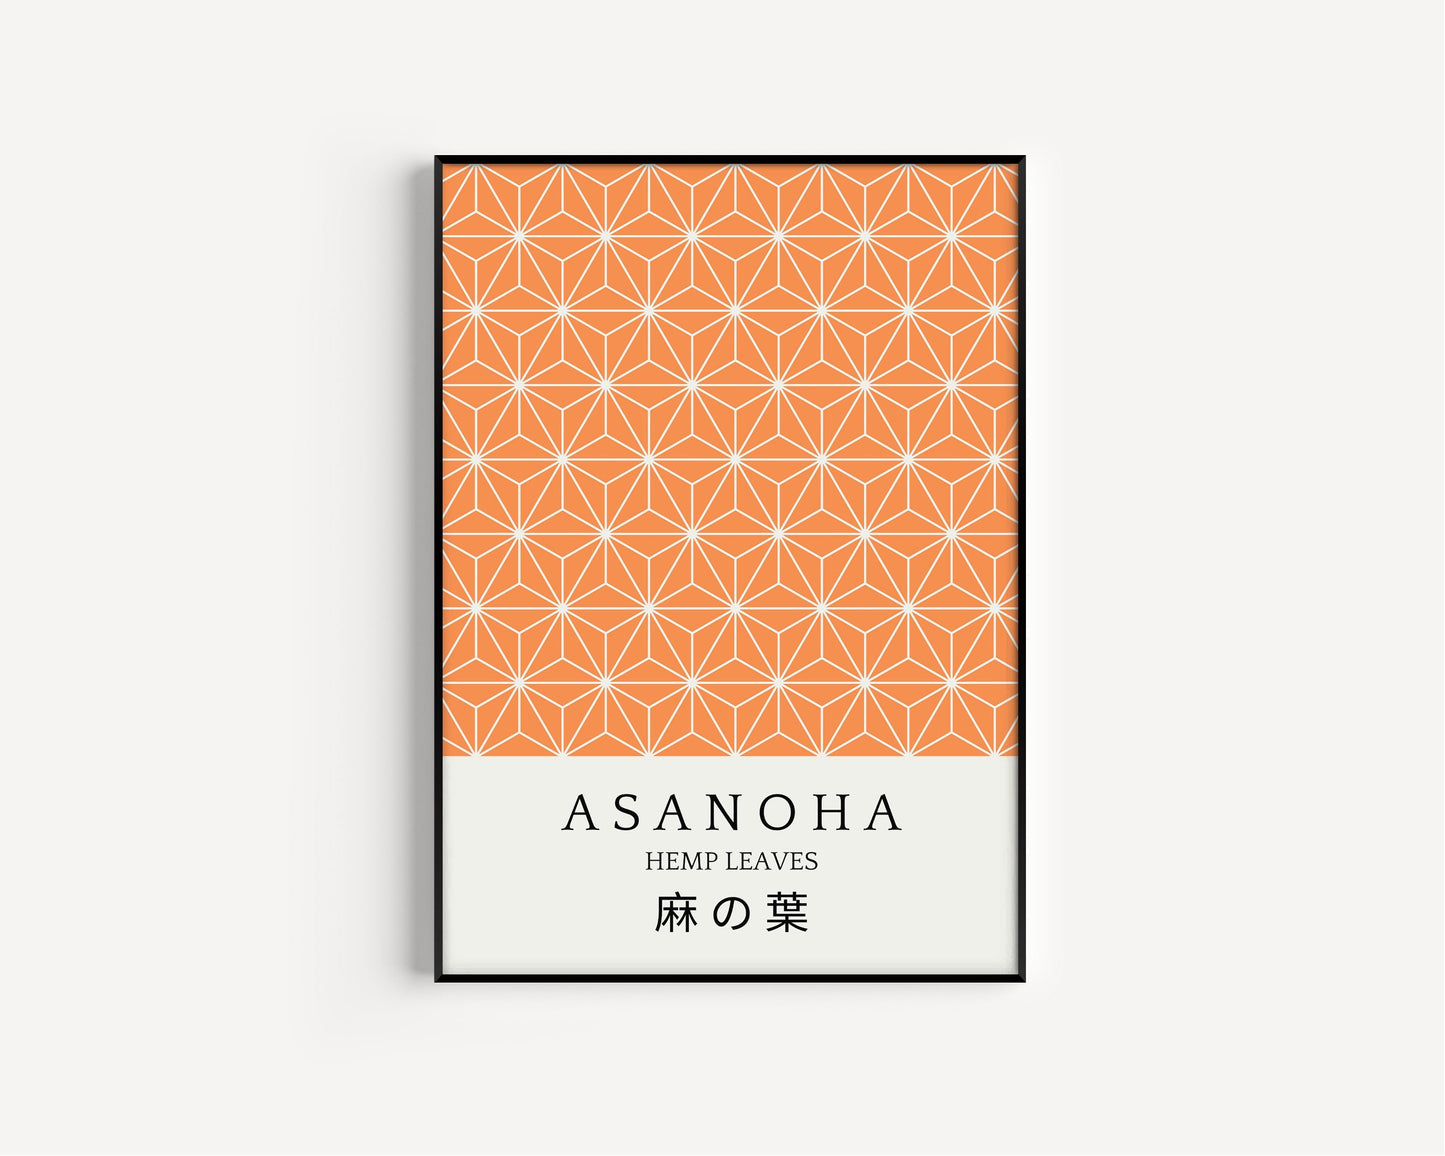 Japanese Patterns - Set of 2 Posters Asanoha Seigeiha